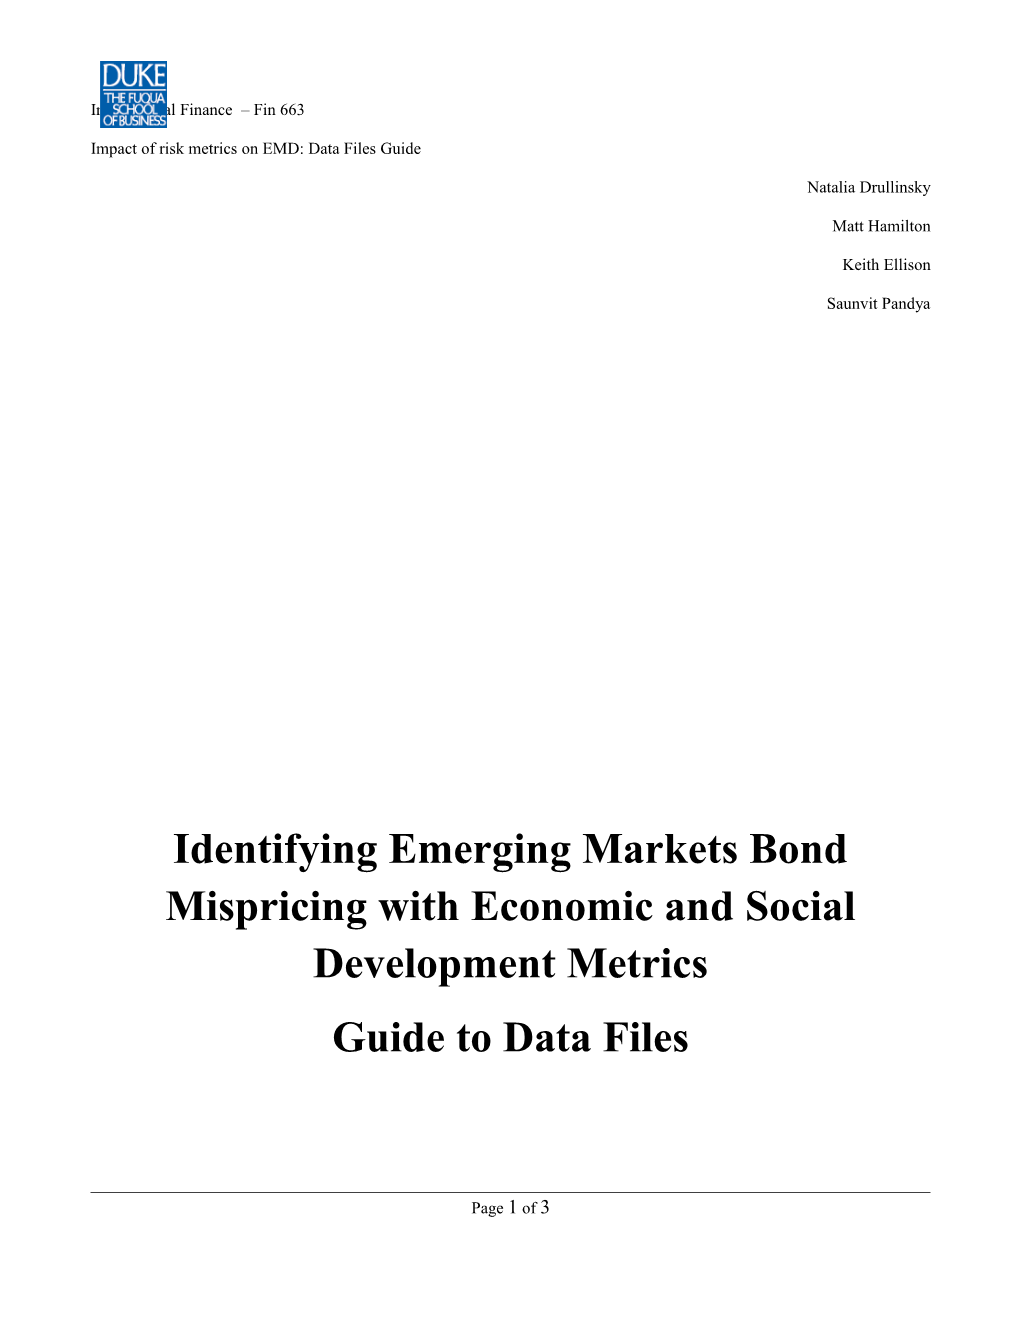 Identifying Emerging Markets Bond Mispricing with Economic and Social Development Metrics